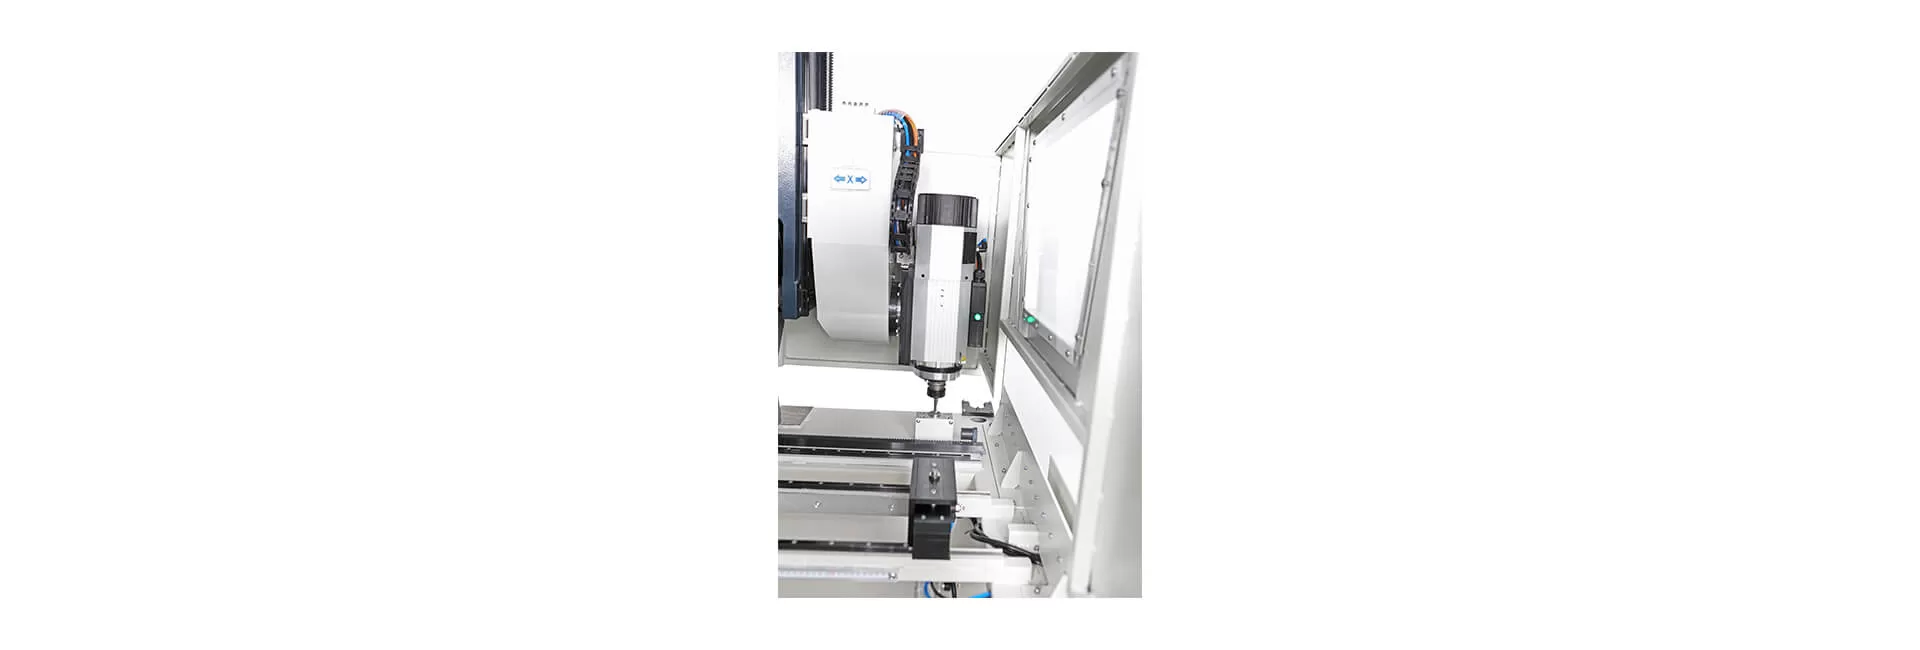 INO BOXTER 4S 4 Axis CNC Profile Machining Center